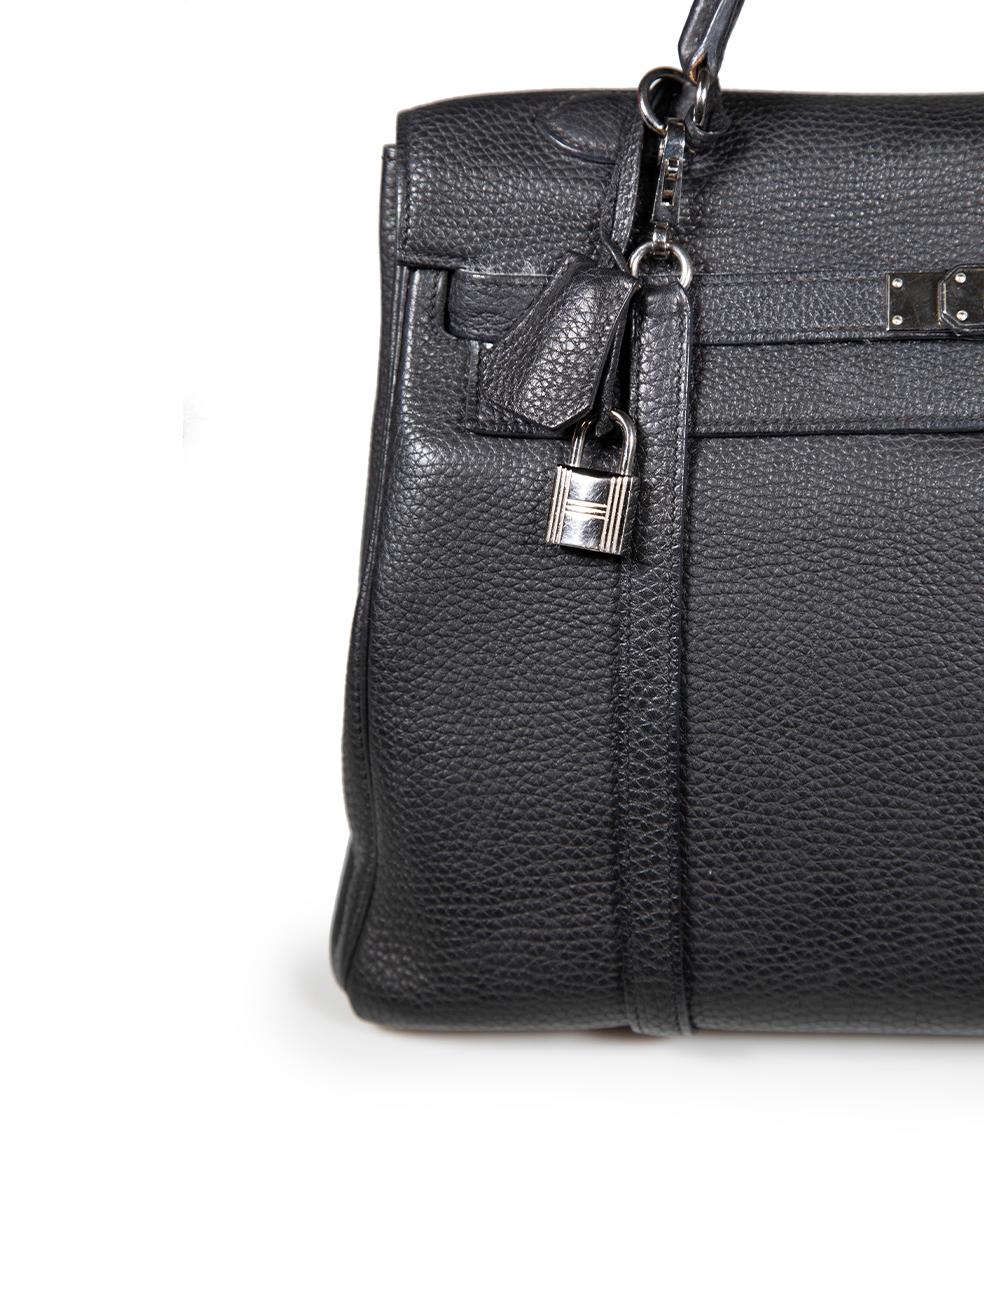 Hermès 2009 Black Leather Kelly 35 Retourne Noir Veau Togo PHW For Sale 3